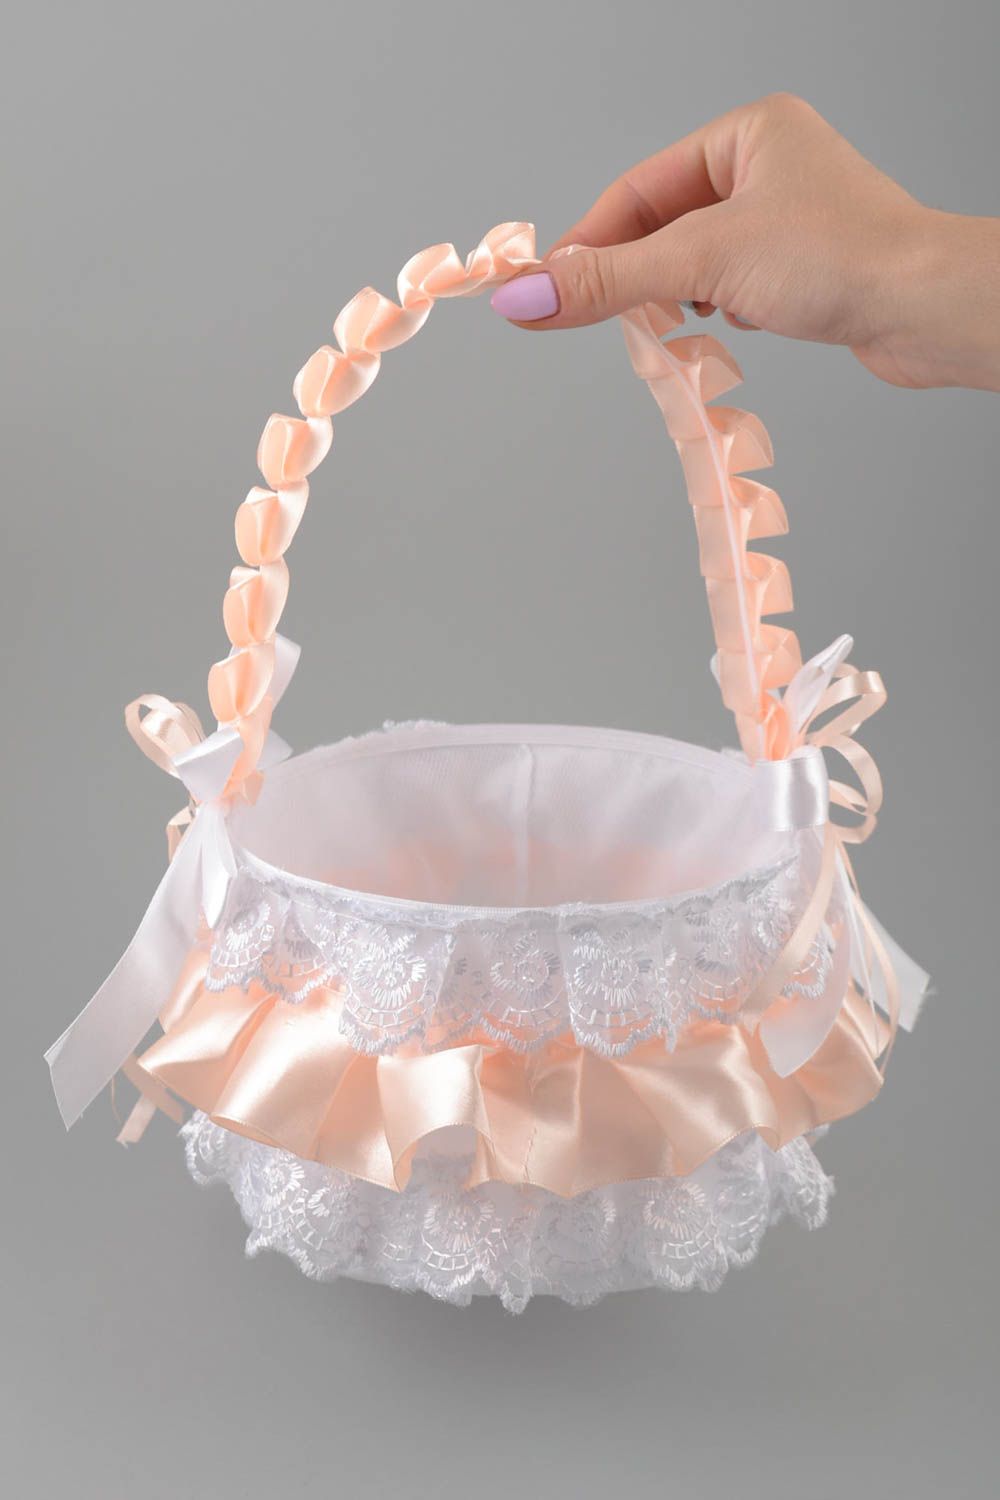 Handmade designer decorative lacy wedding basket for money and flower petals photo 5